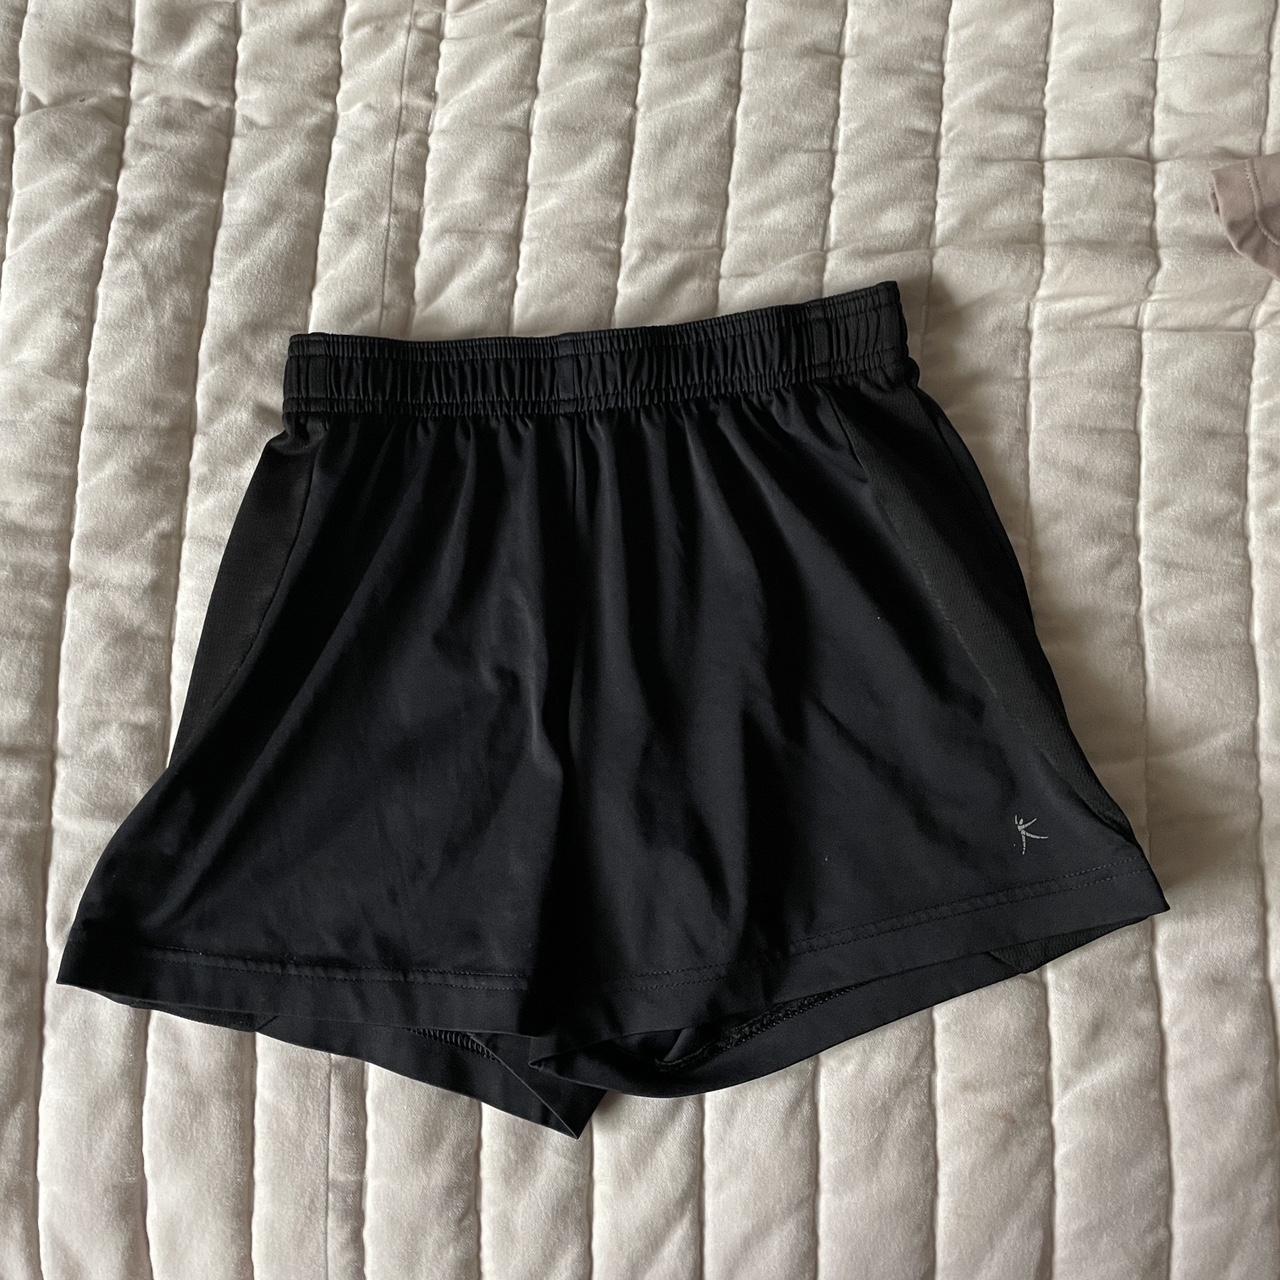 Danskin Now Black Shorts Size Medium logo is peeling - Depop